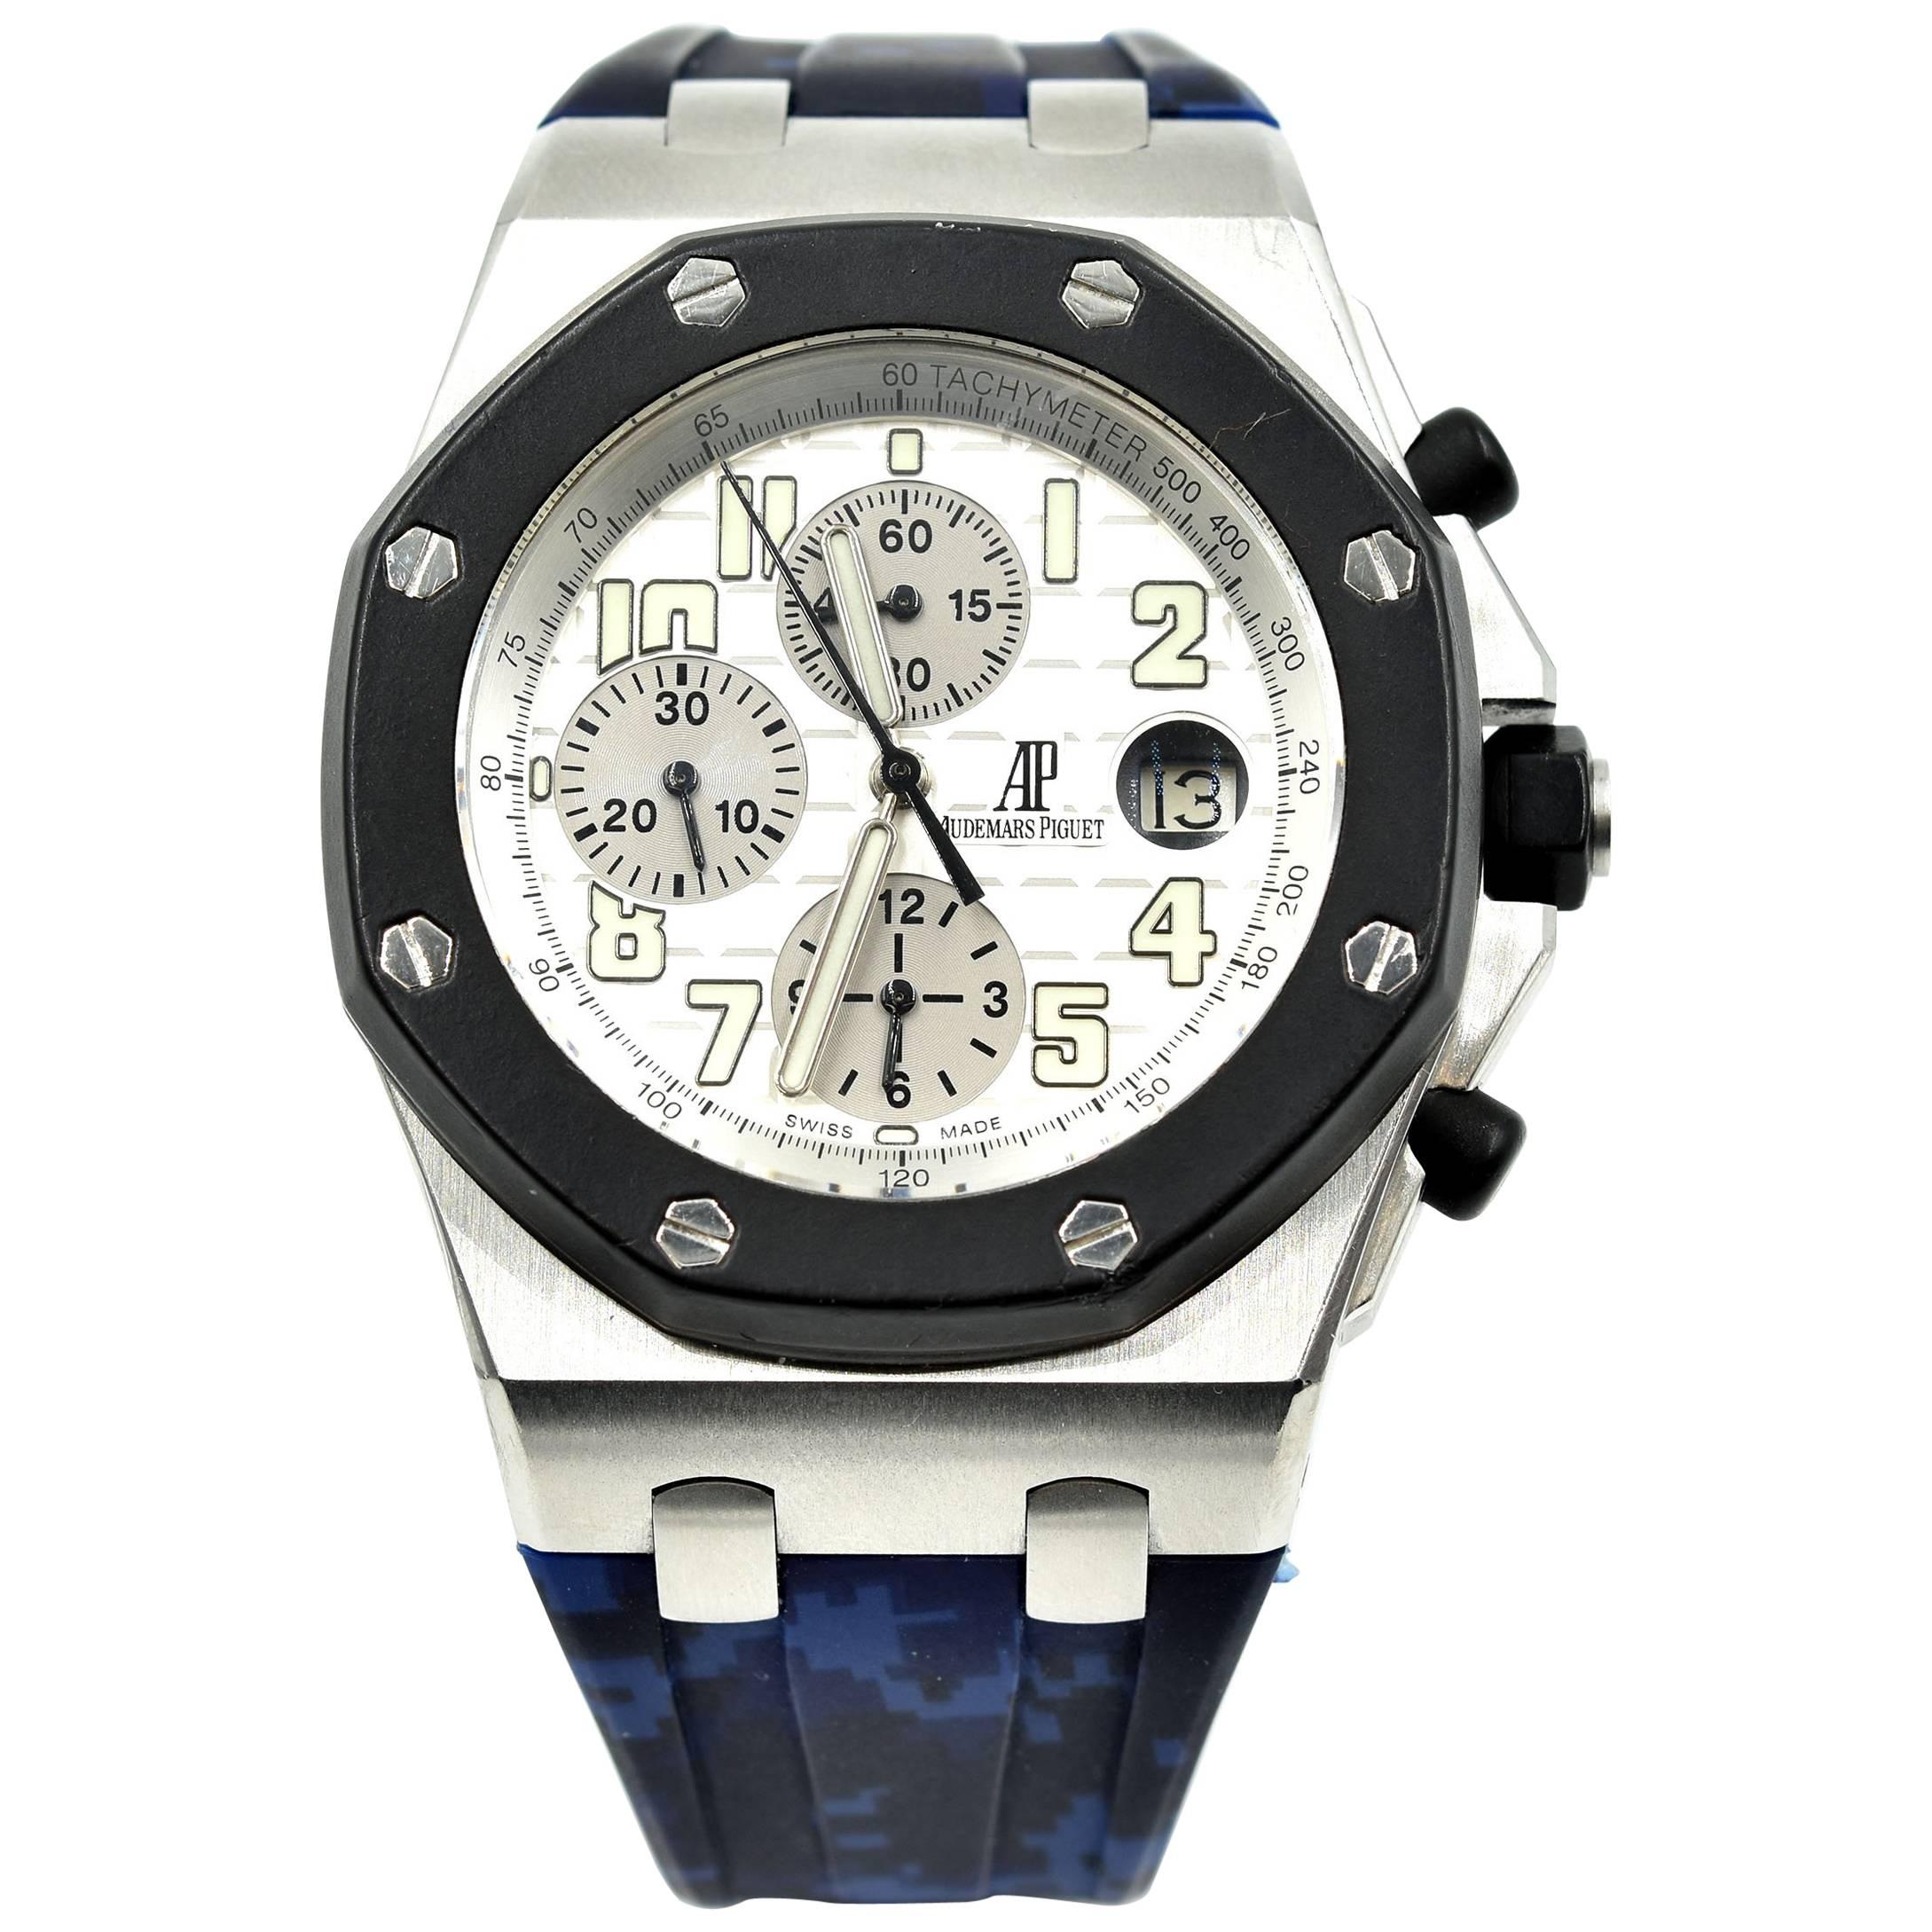 Audemars Piguet stainless steel Royal Oak Offshore Chronograph Wristwatch